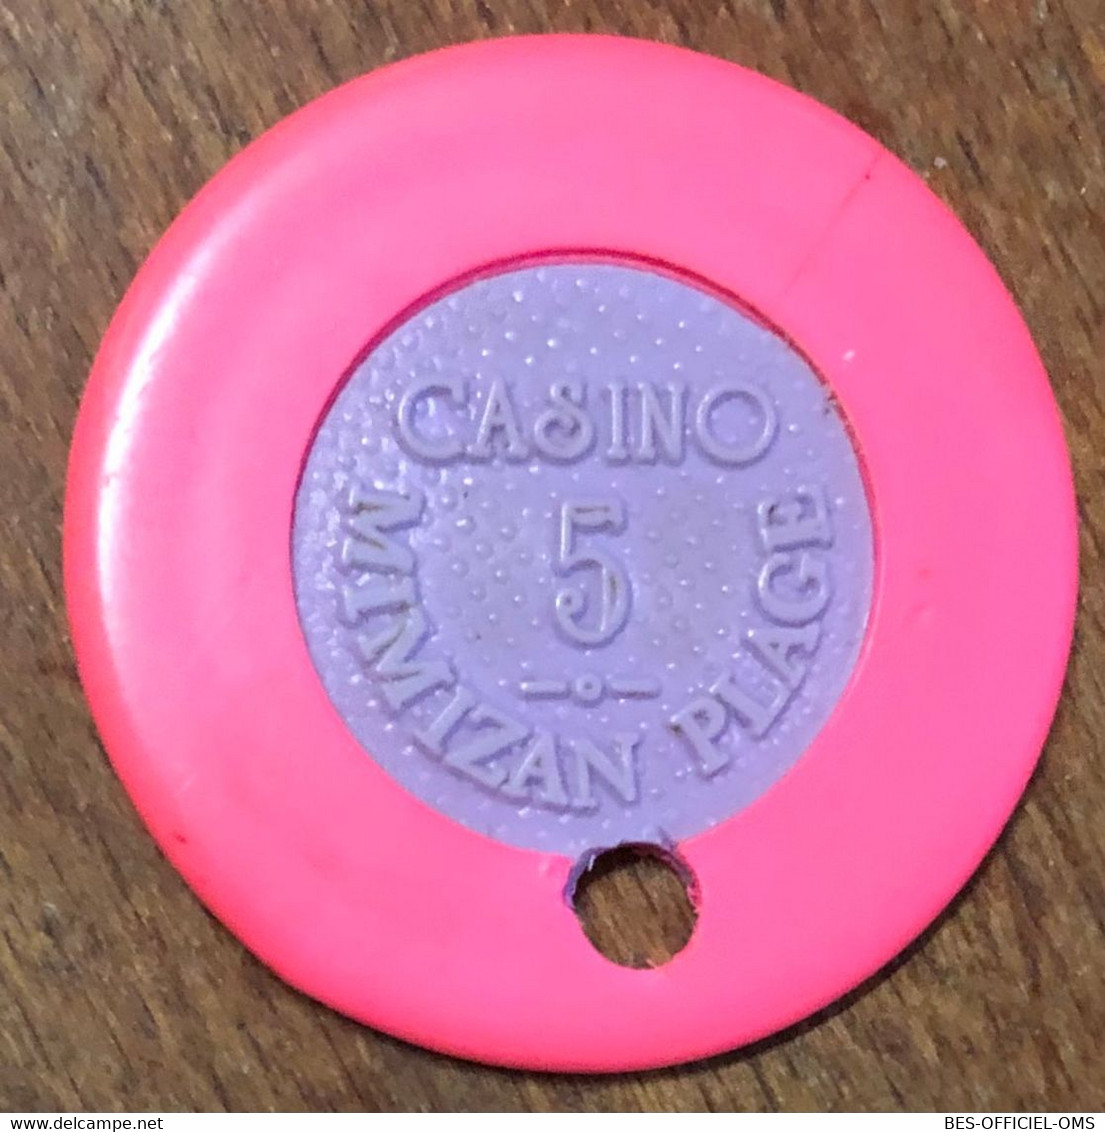 40 MIMIZAN PLAGE CASINO JETON DE 5 FRANCS TROUÉ CHIP COINS TOKENS GAMING - Casino